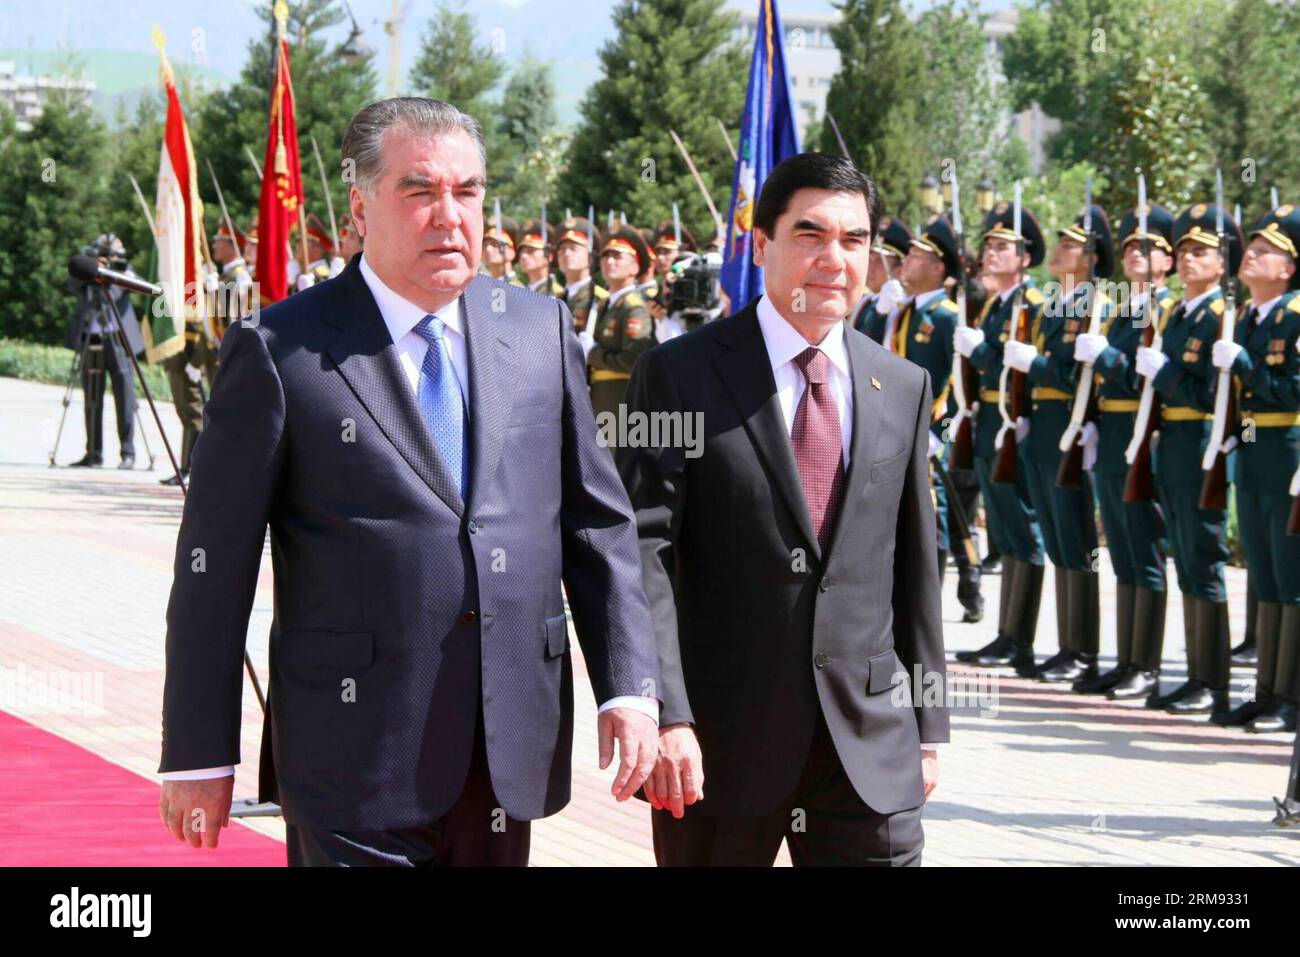 (140505) -- DASHANBE, May 5, 2014 (Xinhua) -- Turkmen President Gurbanguly Berdimuhamedov (R) reviews an honour guard with his Tajik counterpart Emomali Rahmon in Dushanbe, Tajikistan, May 5, 2014. Turkmen President Gurbanguly Berdimuhamedov arrived in Dushanbe on Monday for a two-day state visit. (Xinhua) TAJIKISTAN-TURKMENISTAN-POLITICS-VISIT PUBLICATIONxNOTxINxCHN   May 5 2014 XINHUA Turkmen President Gurbanguly Berdimuhamedov r Reviews to Honour Guard With His Tajik Part Emomali Rahmon in Dushanbe Tajikistan May 5 2014 Turkmen President Gurbanguly Berdimuhamedov arrived in Dushanbe ON Mond Stock Photo